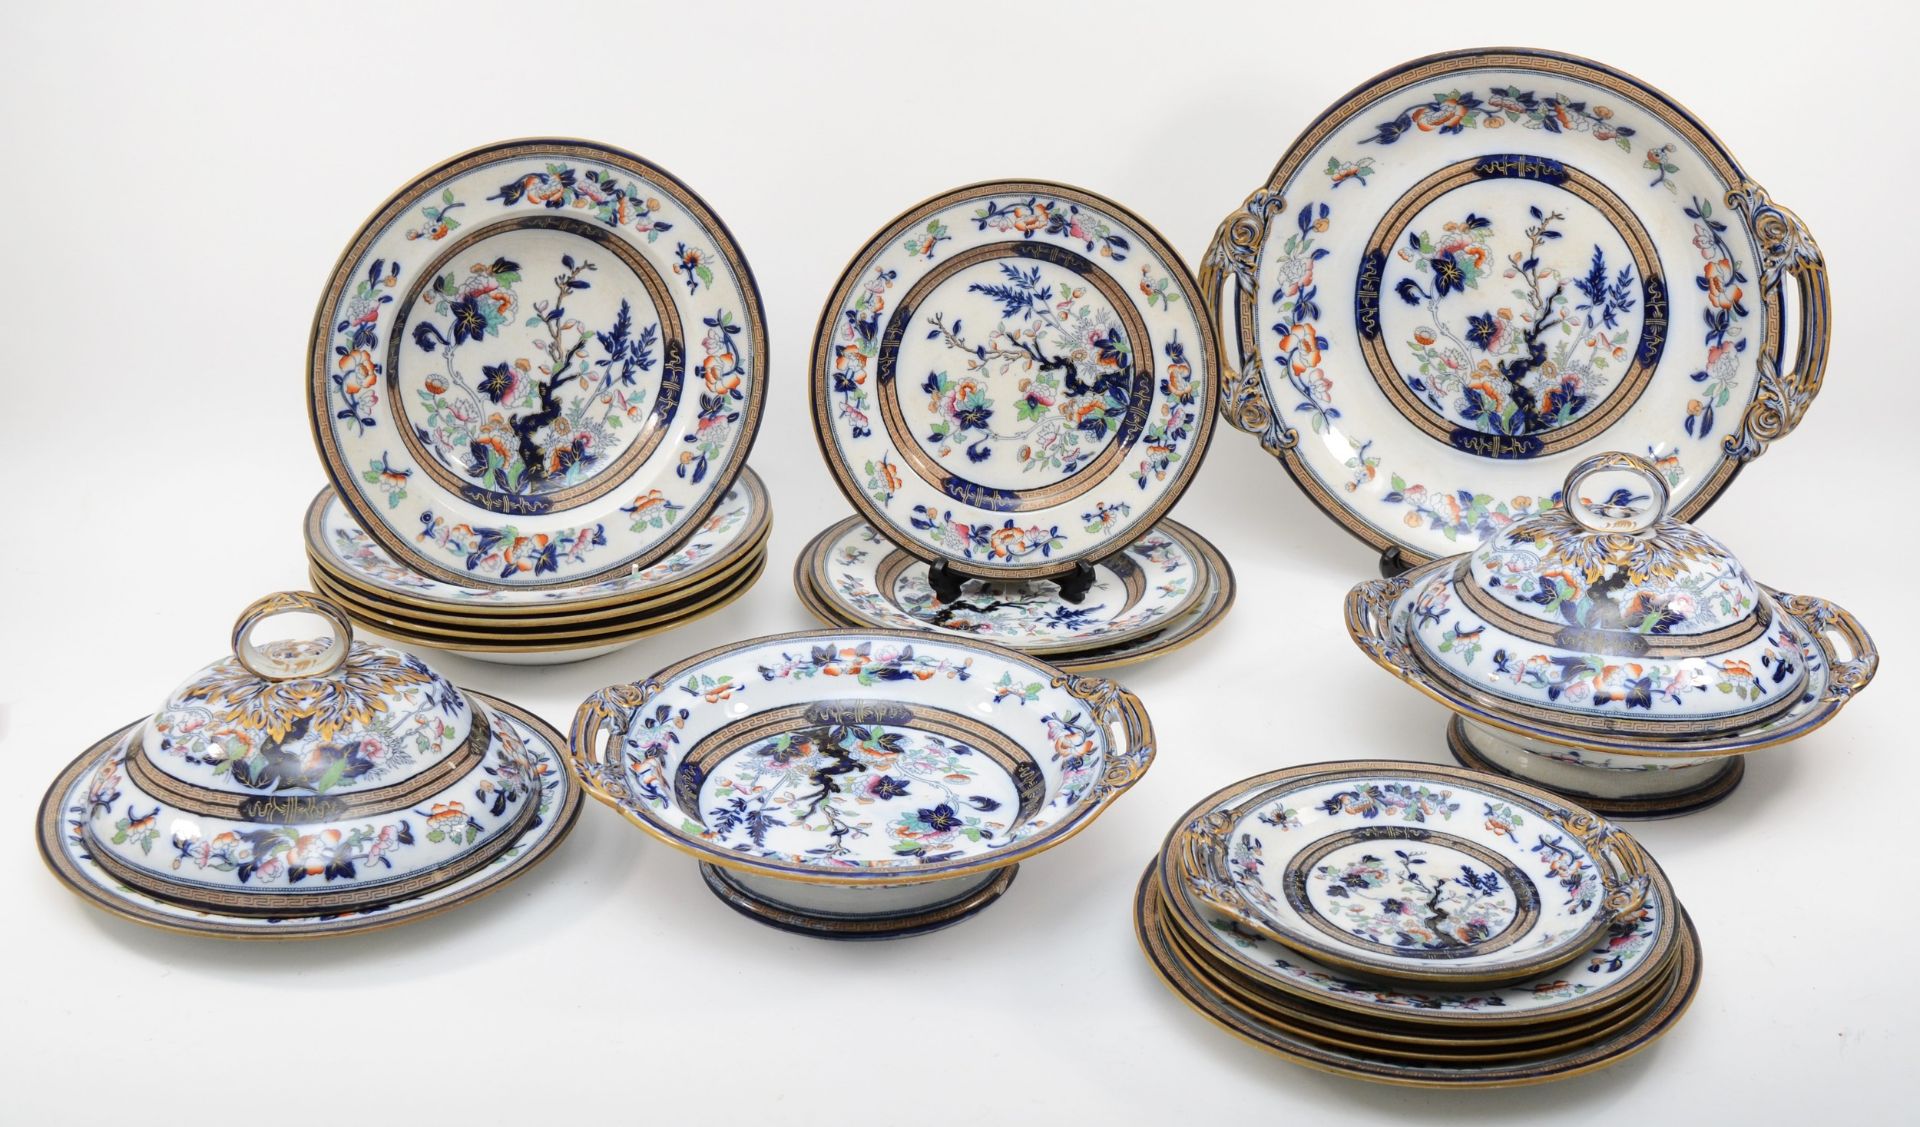 A 19th century Pinder, Bourne & Hope 'Dresden' pattern glazed earthenware pattern part dinner set